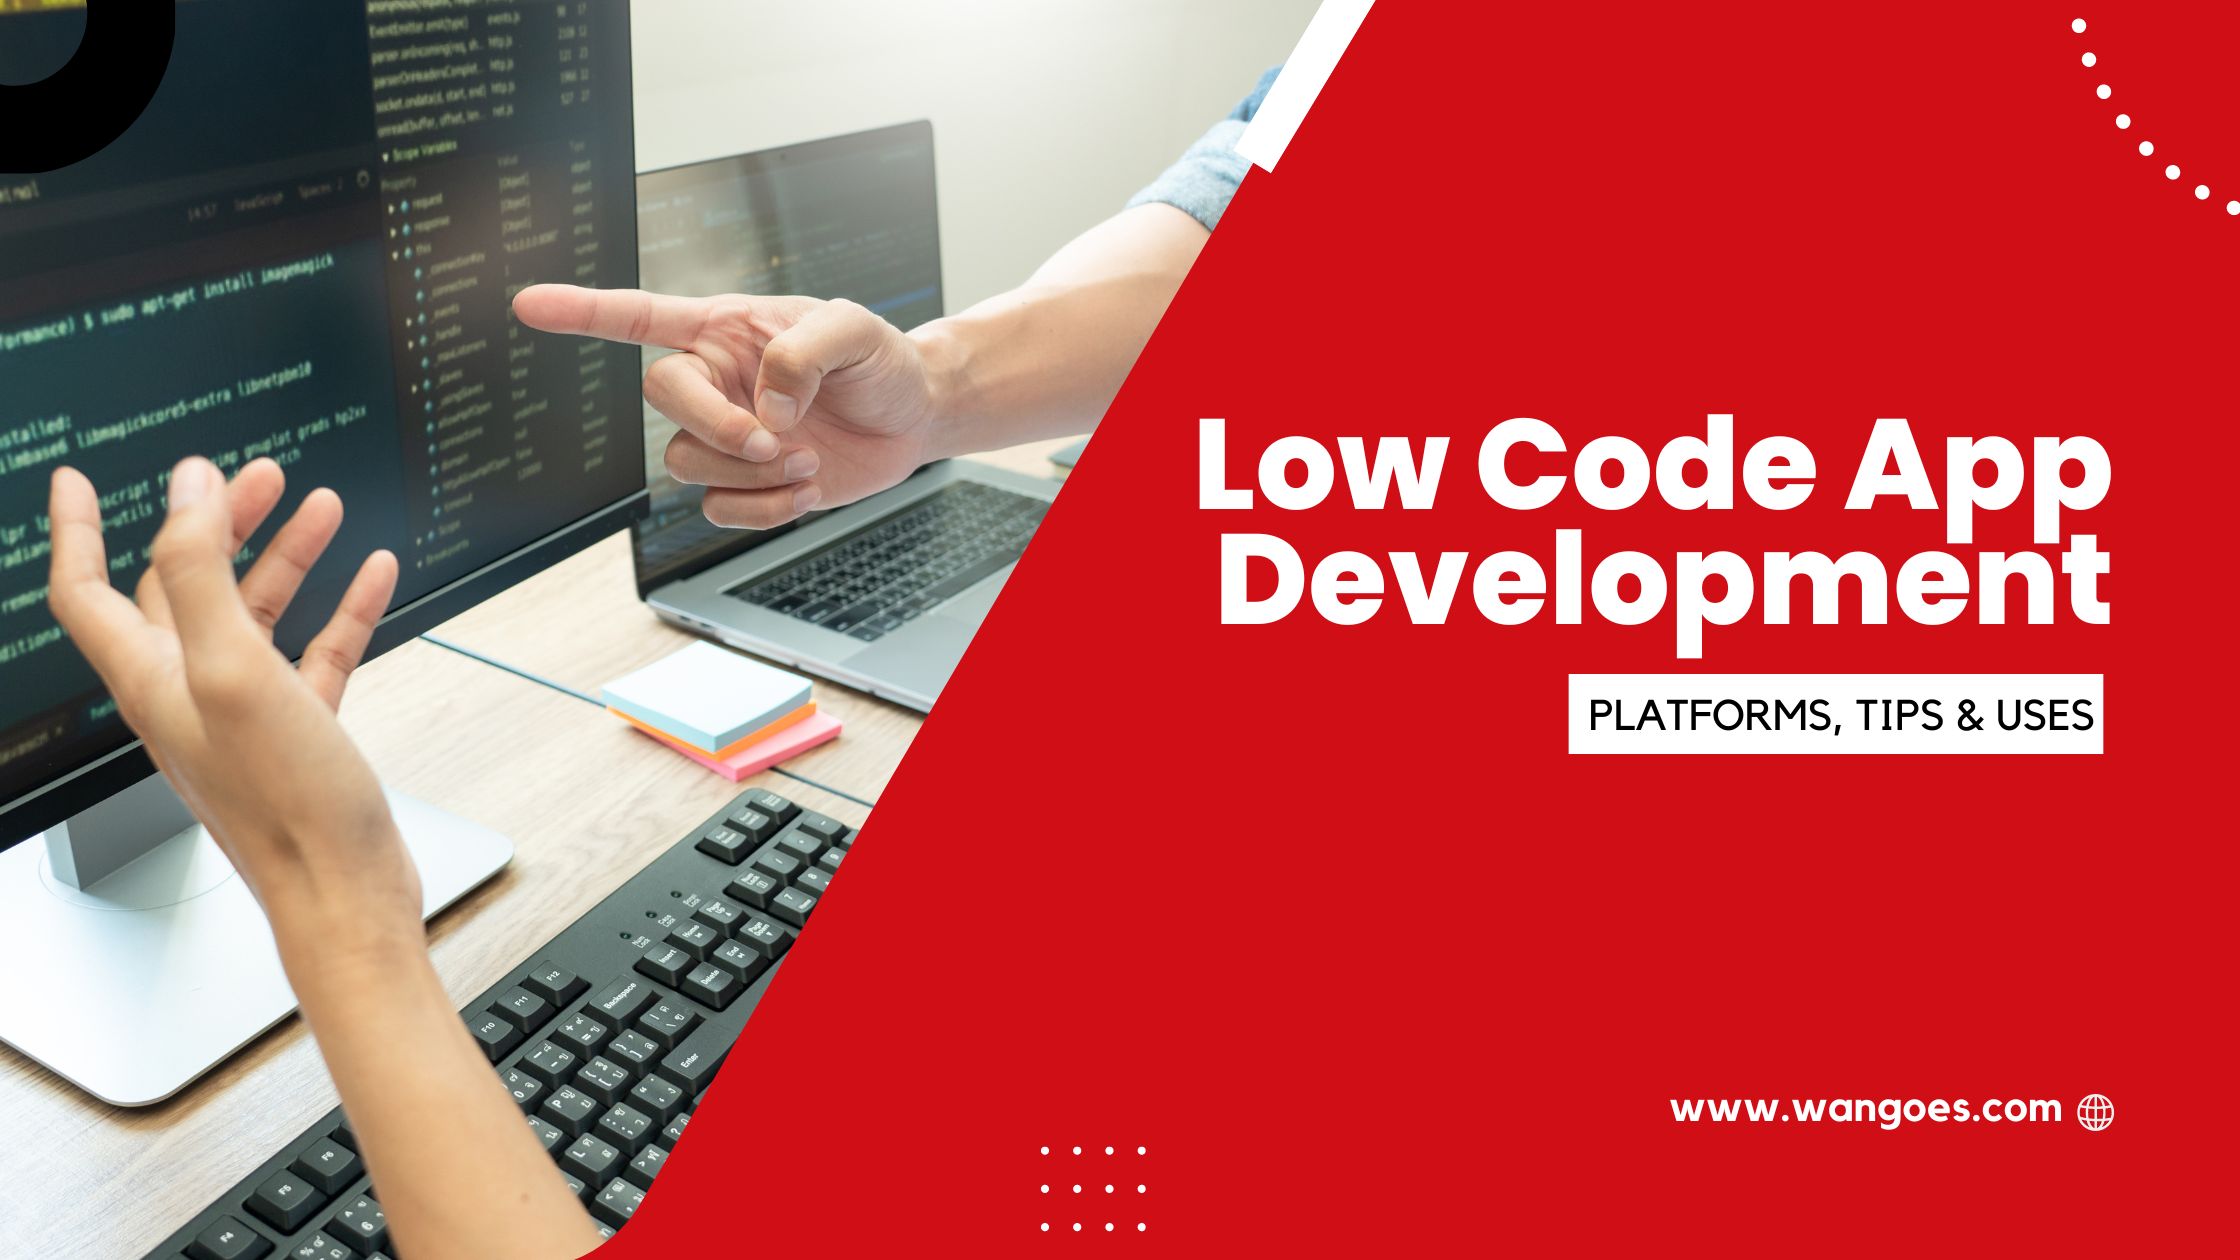 Low Code App Development Defined | Platforms, Tips & Uses